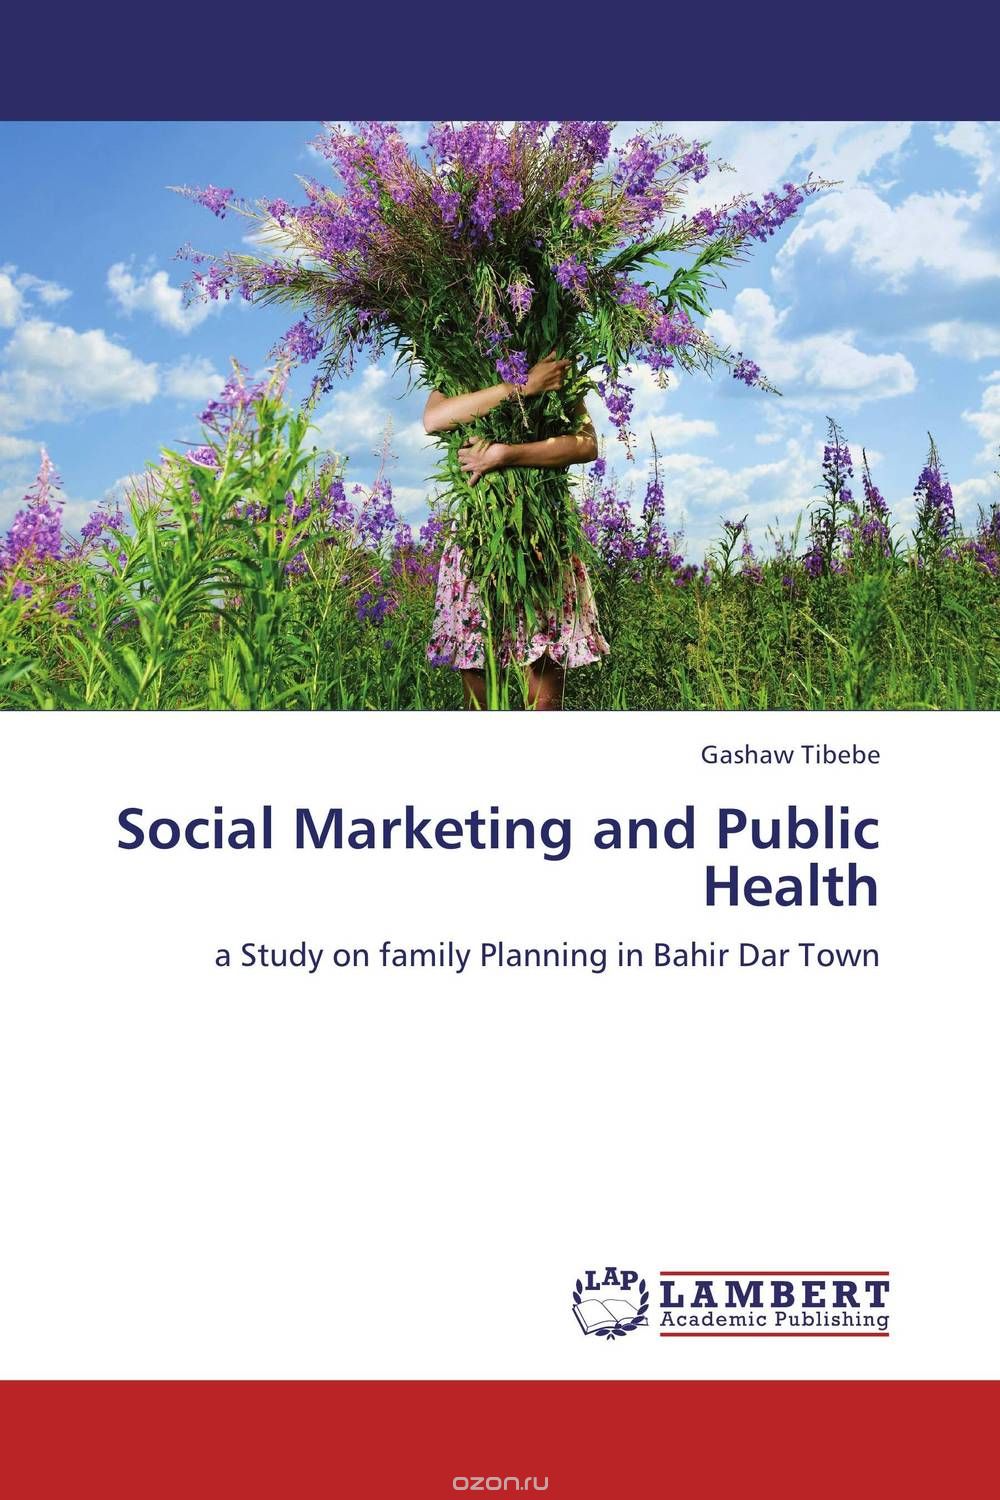 Скачать книгу "Social Marketing and Public Health"